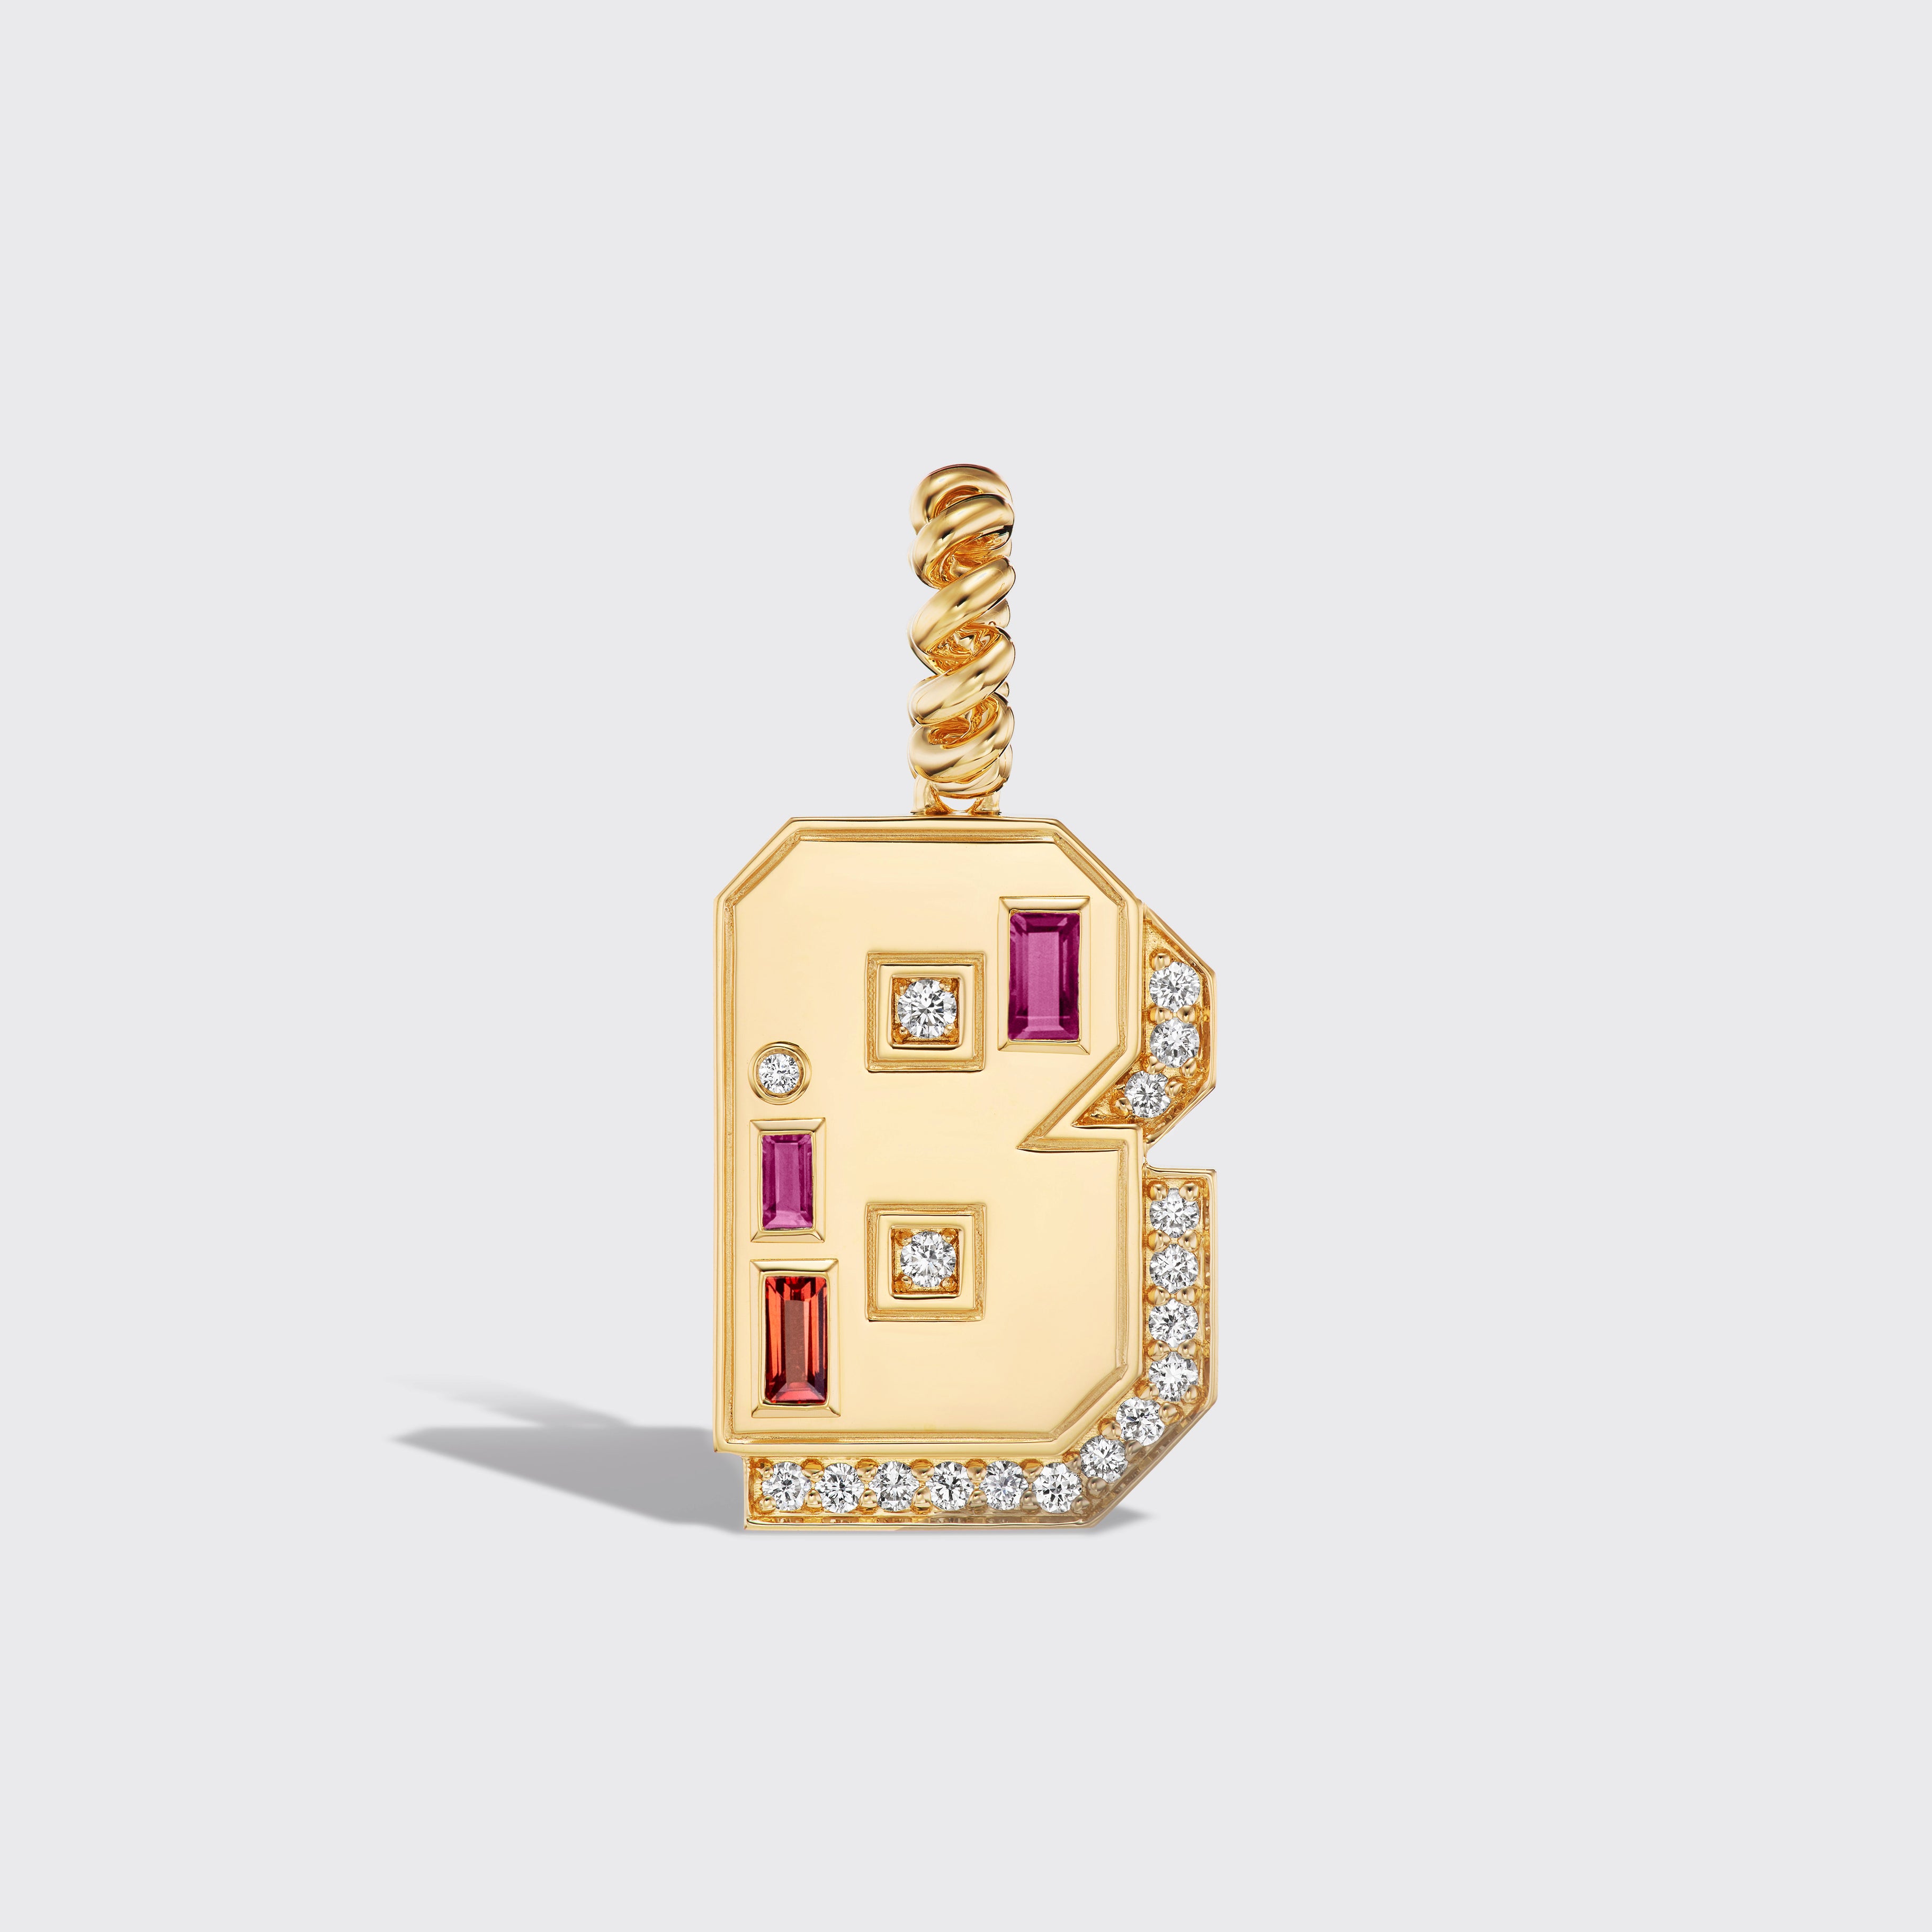 JUMBO YELLOW GOLD DIAMOND LETTER & NUMBER PENDANT [orange & pink sapphires]